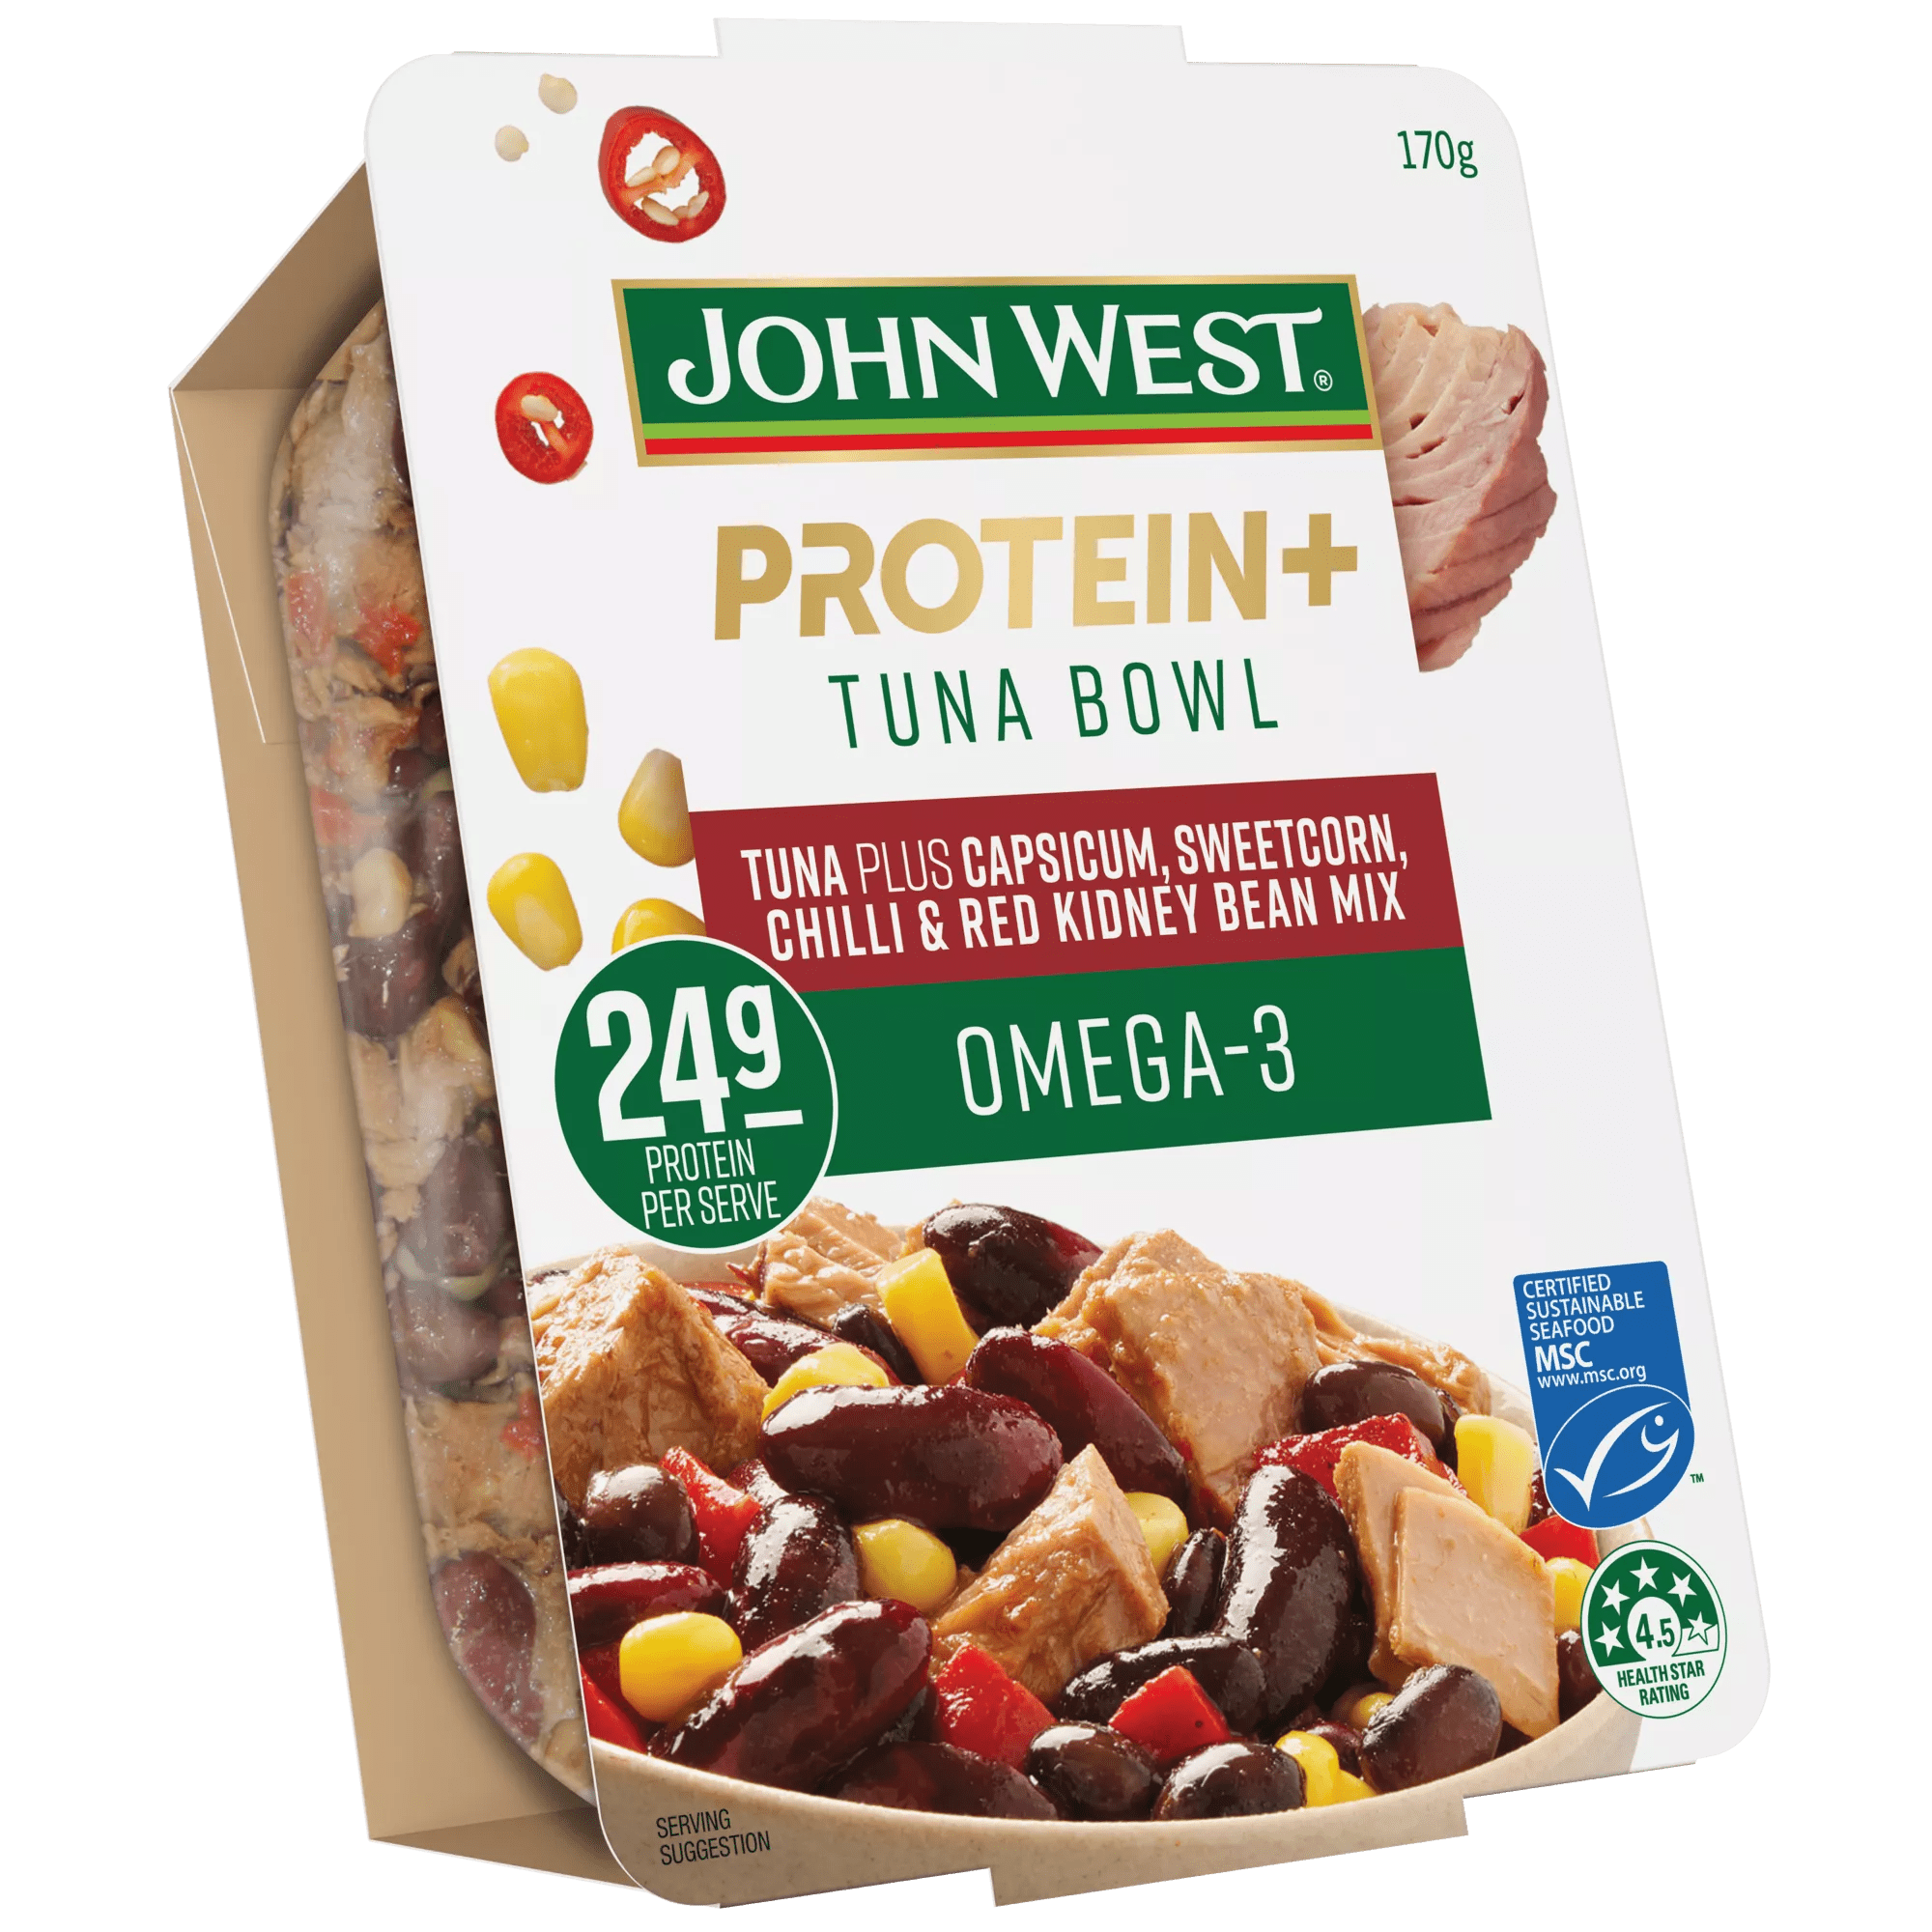 JW Protein+Omega-3 Tuna Capsicum, Sweetcorn, Chilli & Red Kidney Bean Mix 170g